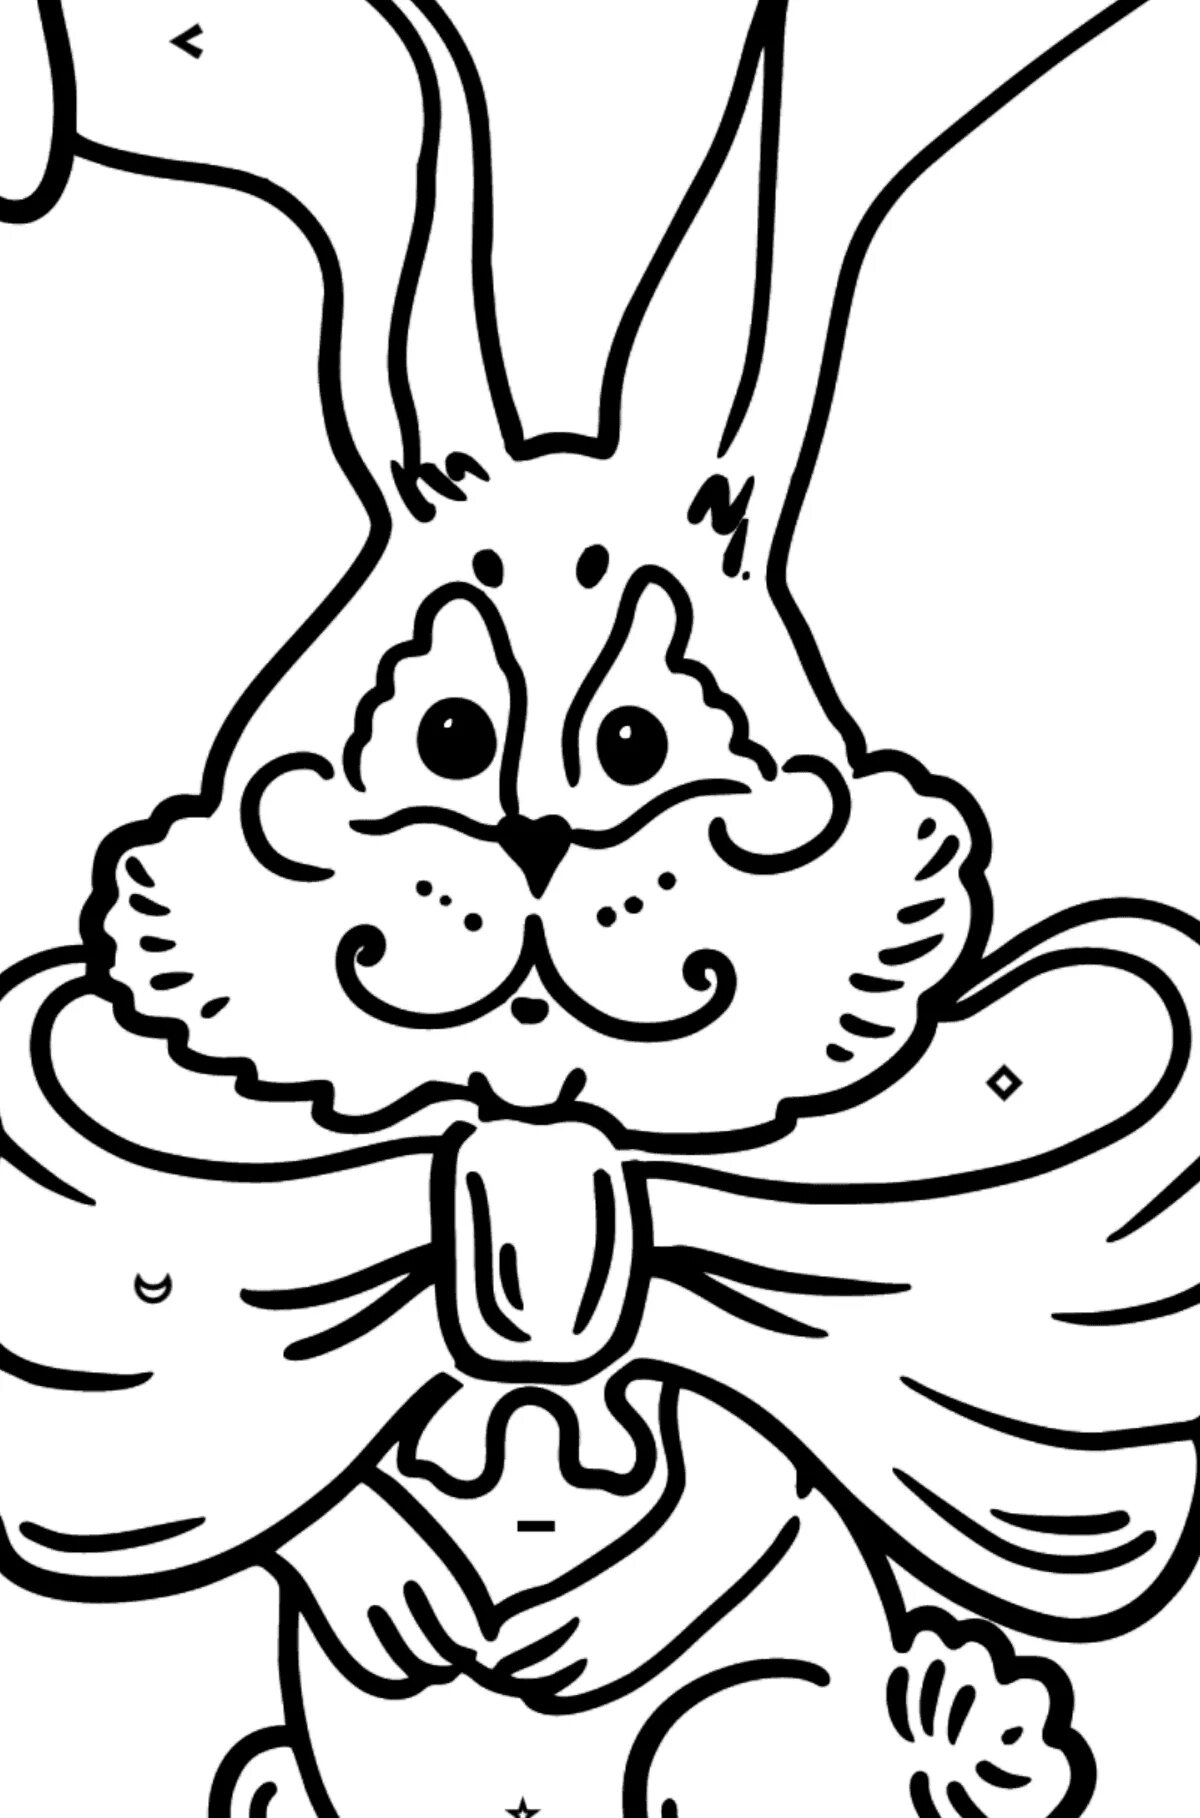 Bunny with a bow #2